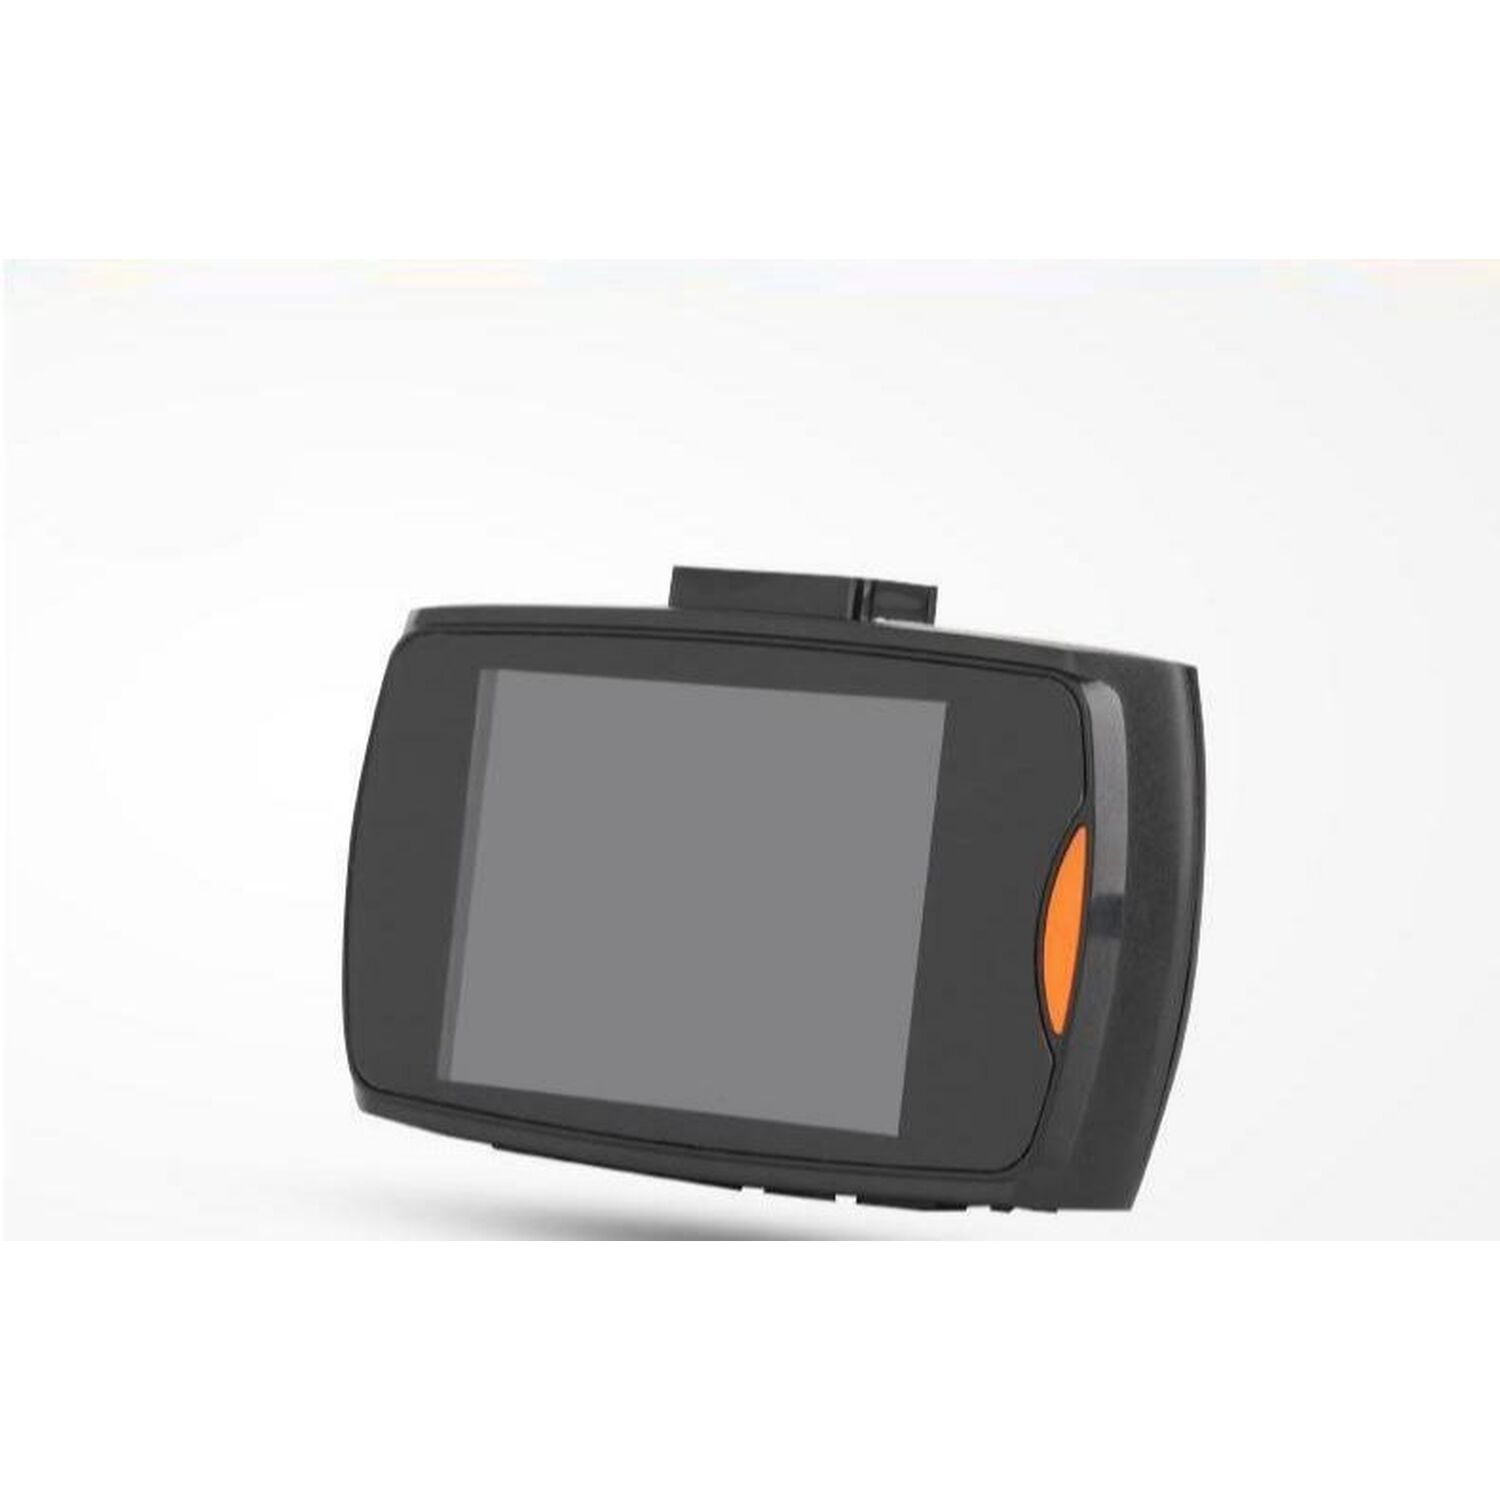 HD Car Dash Camera with SD Card - Black Image 5